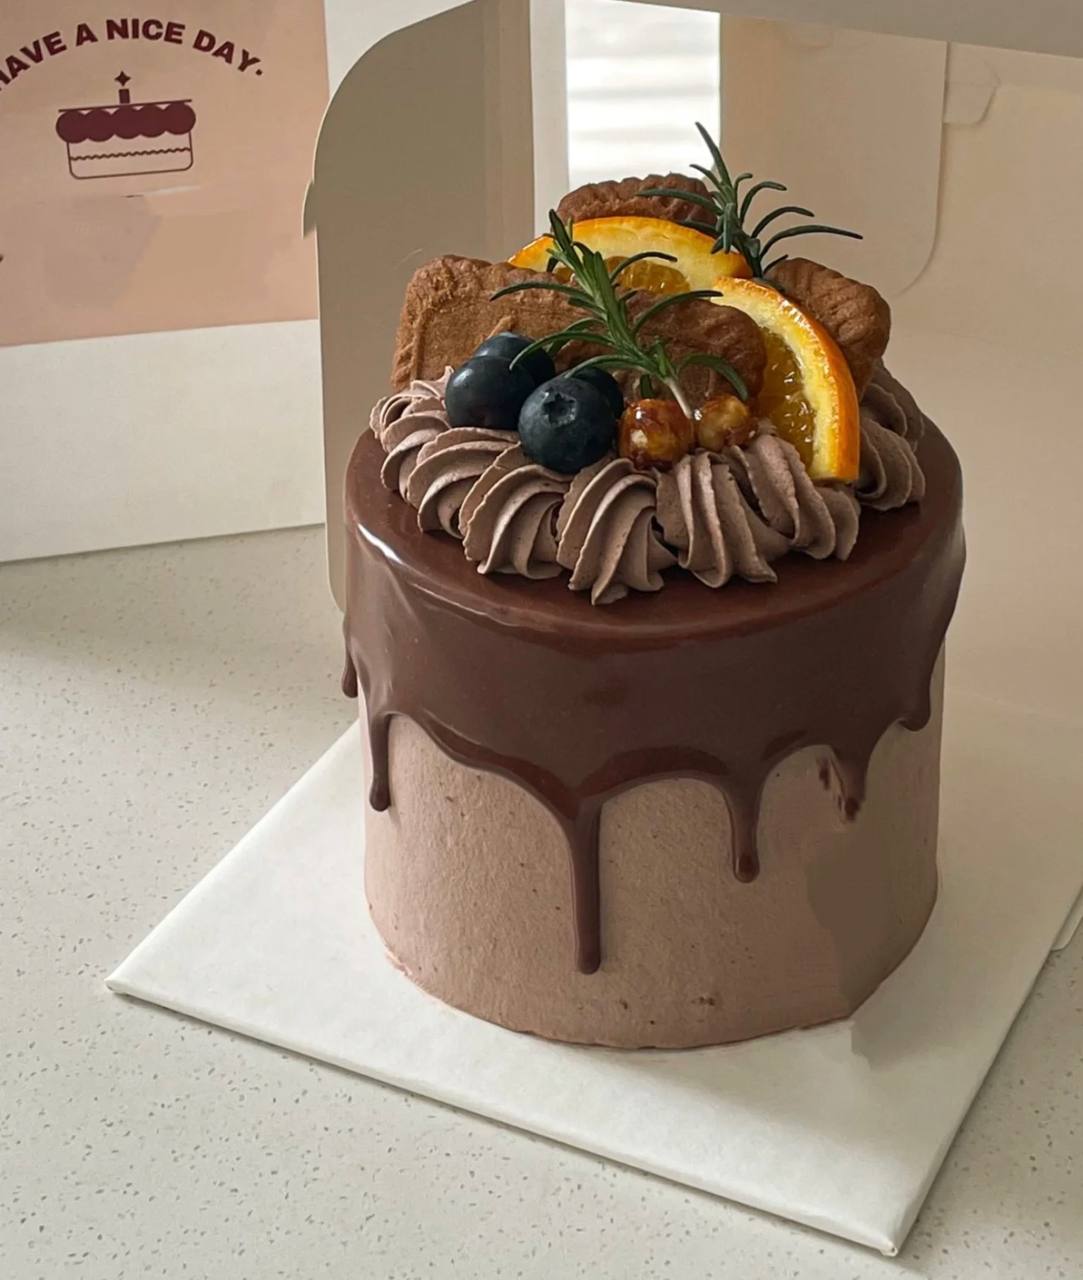 Chocolate Cake in Singapore